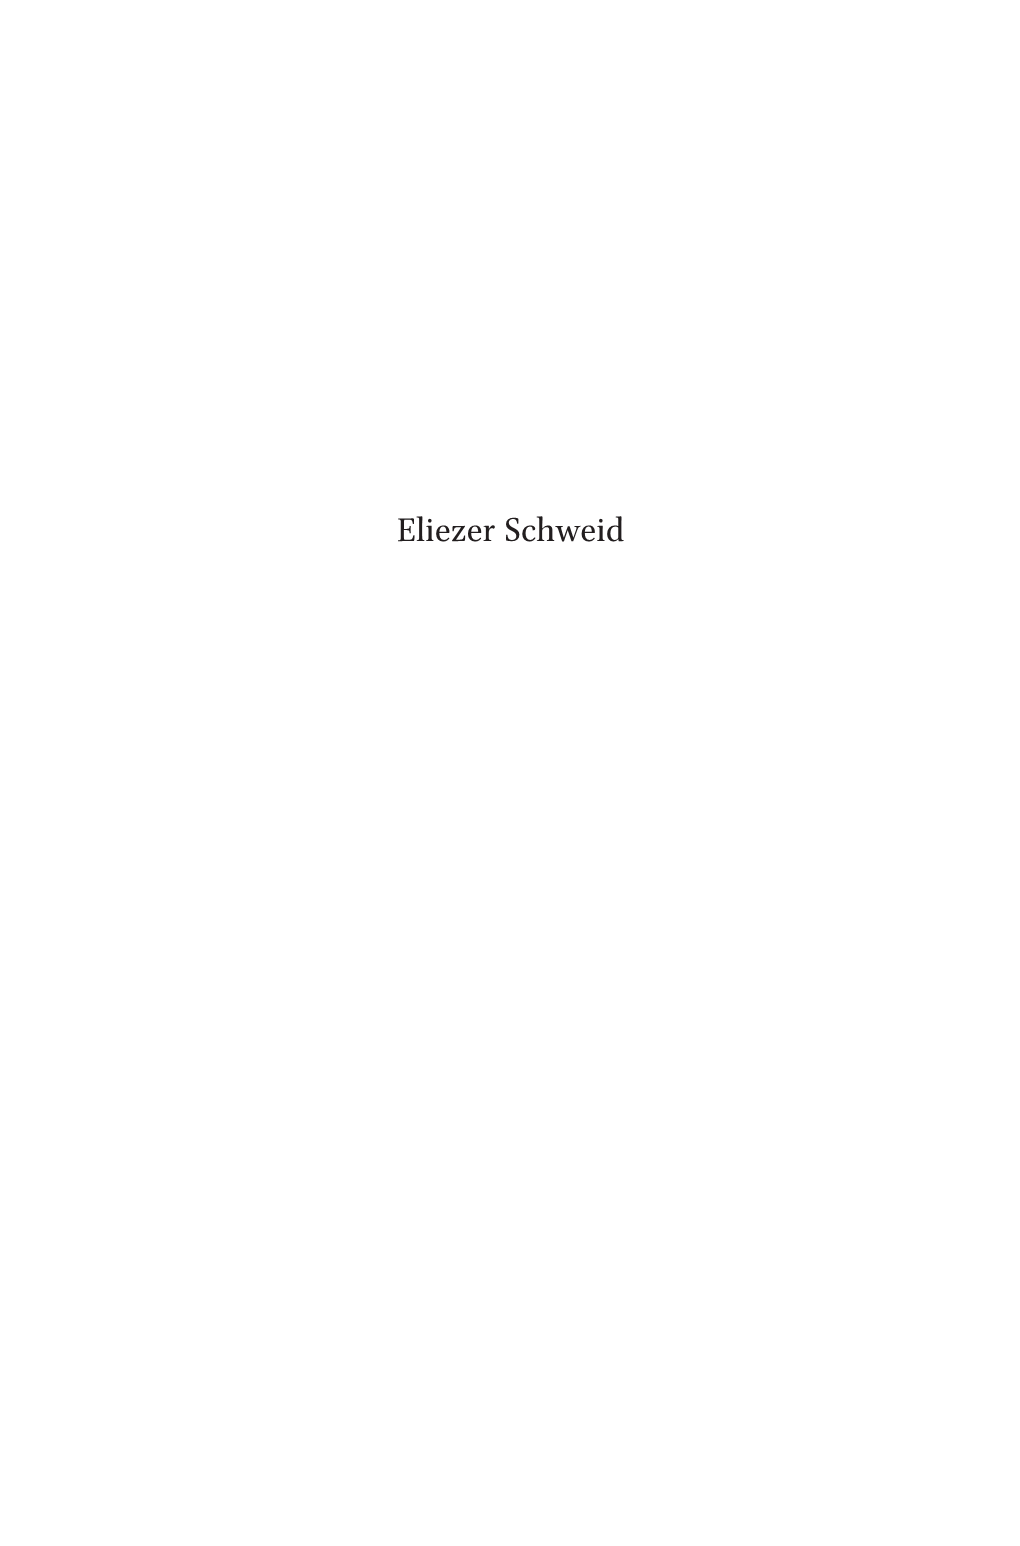 Eliezer Schweid Library of Contemporary Jewish Philosophers